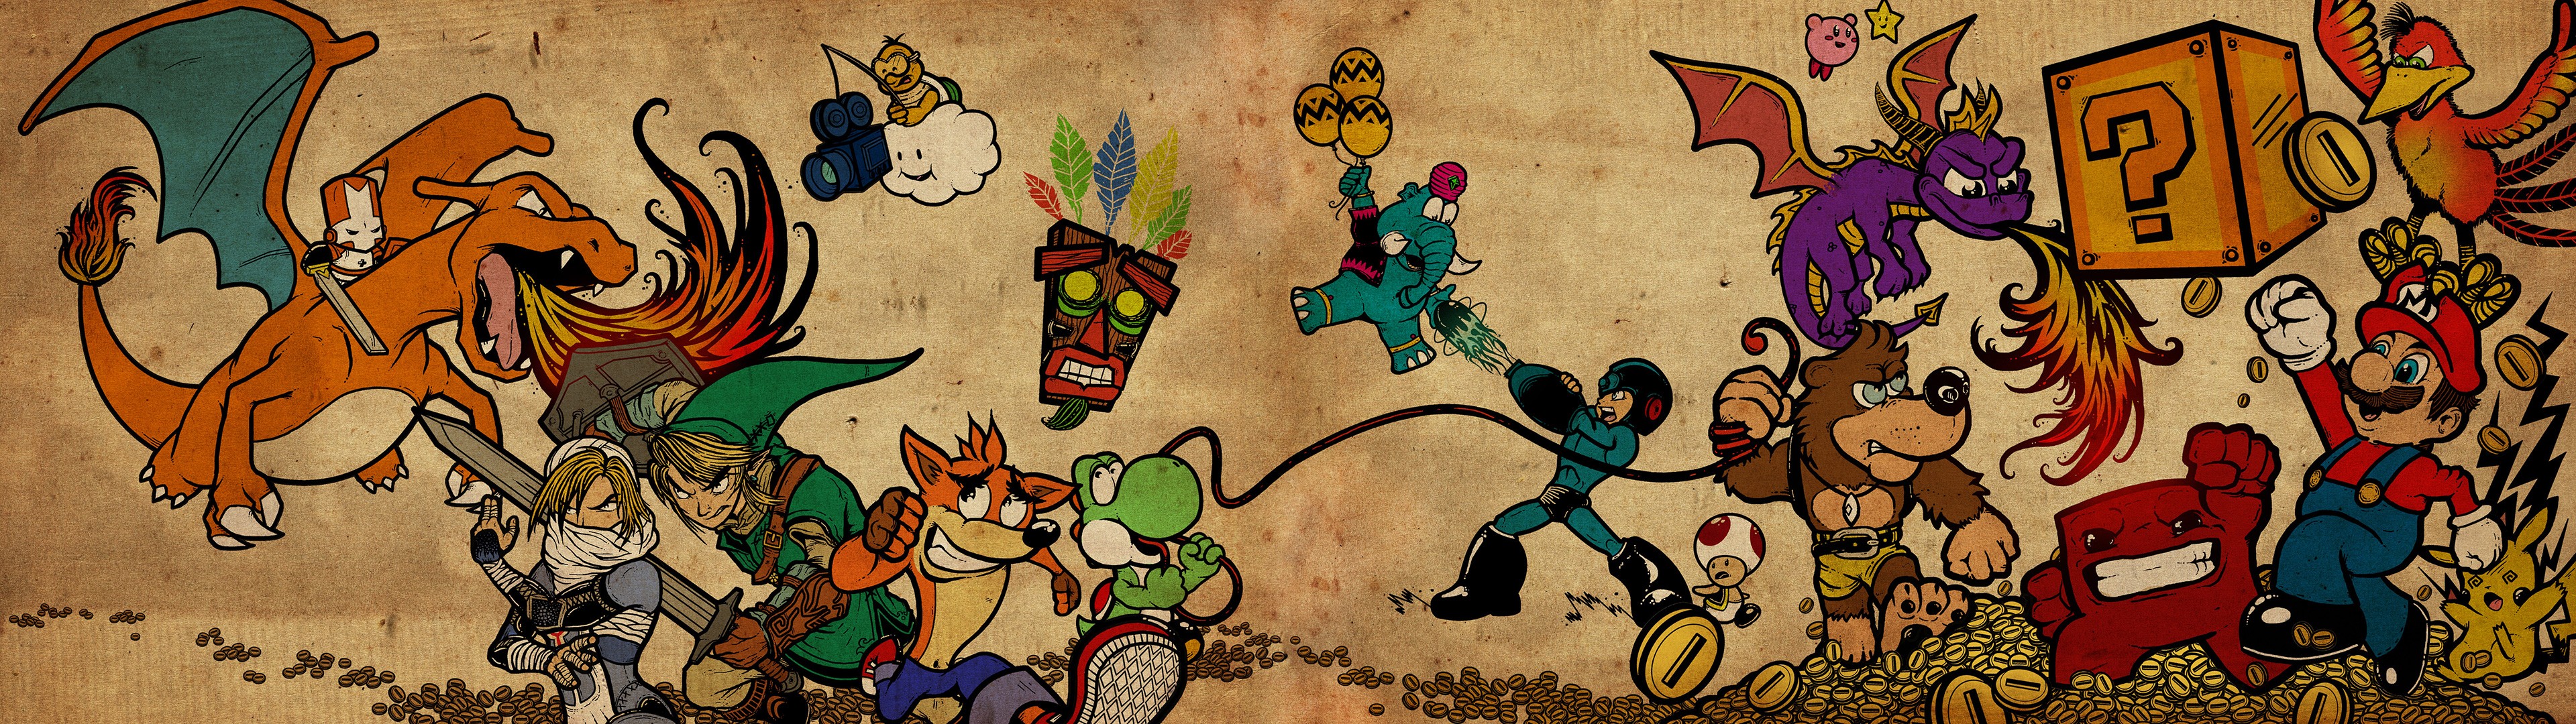 Pokemon Trainers Video Games The Legend Of Zelda Link Yoshi Kirby Spyro Super Meat Boy Crash Bandico 3840x1080